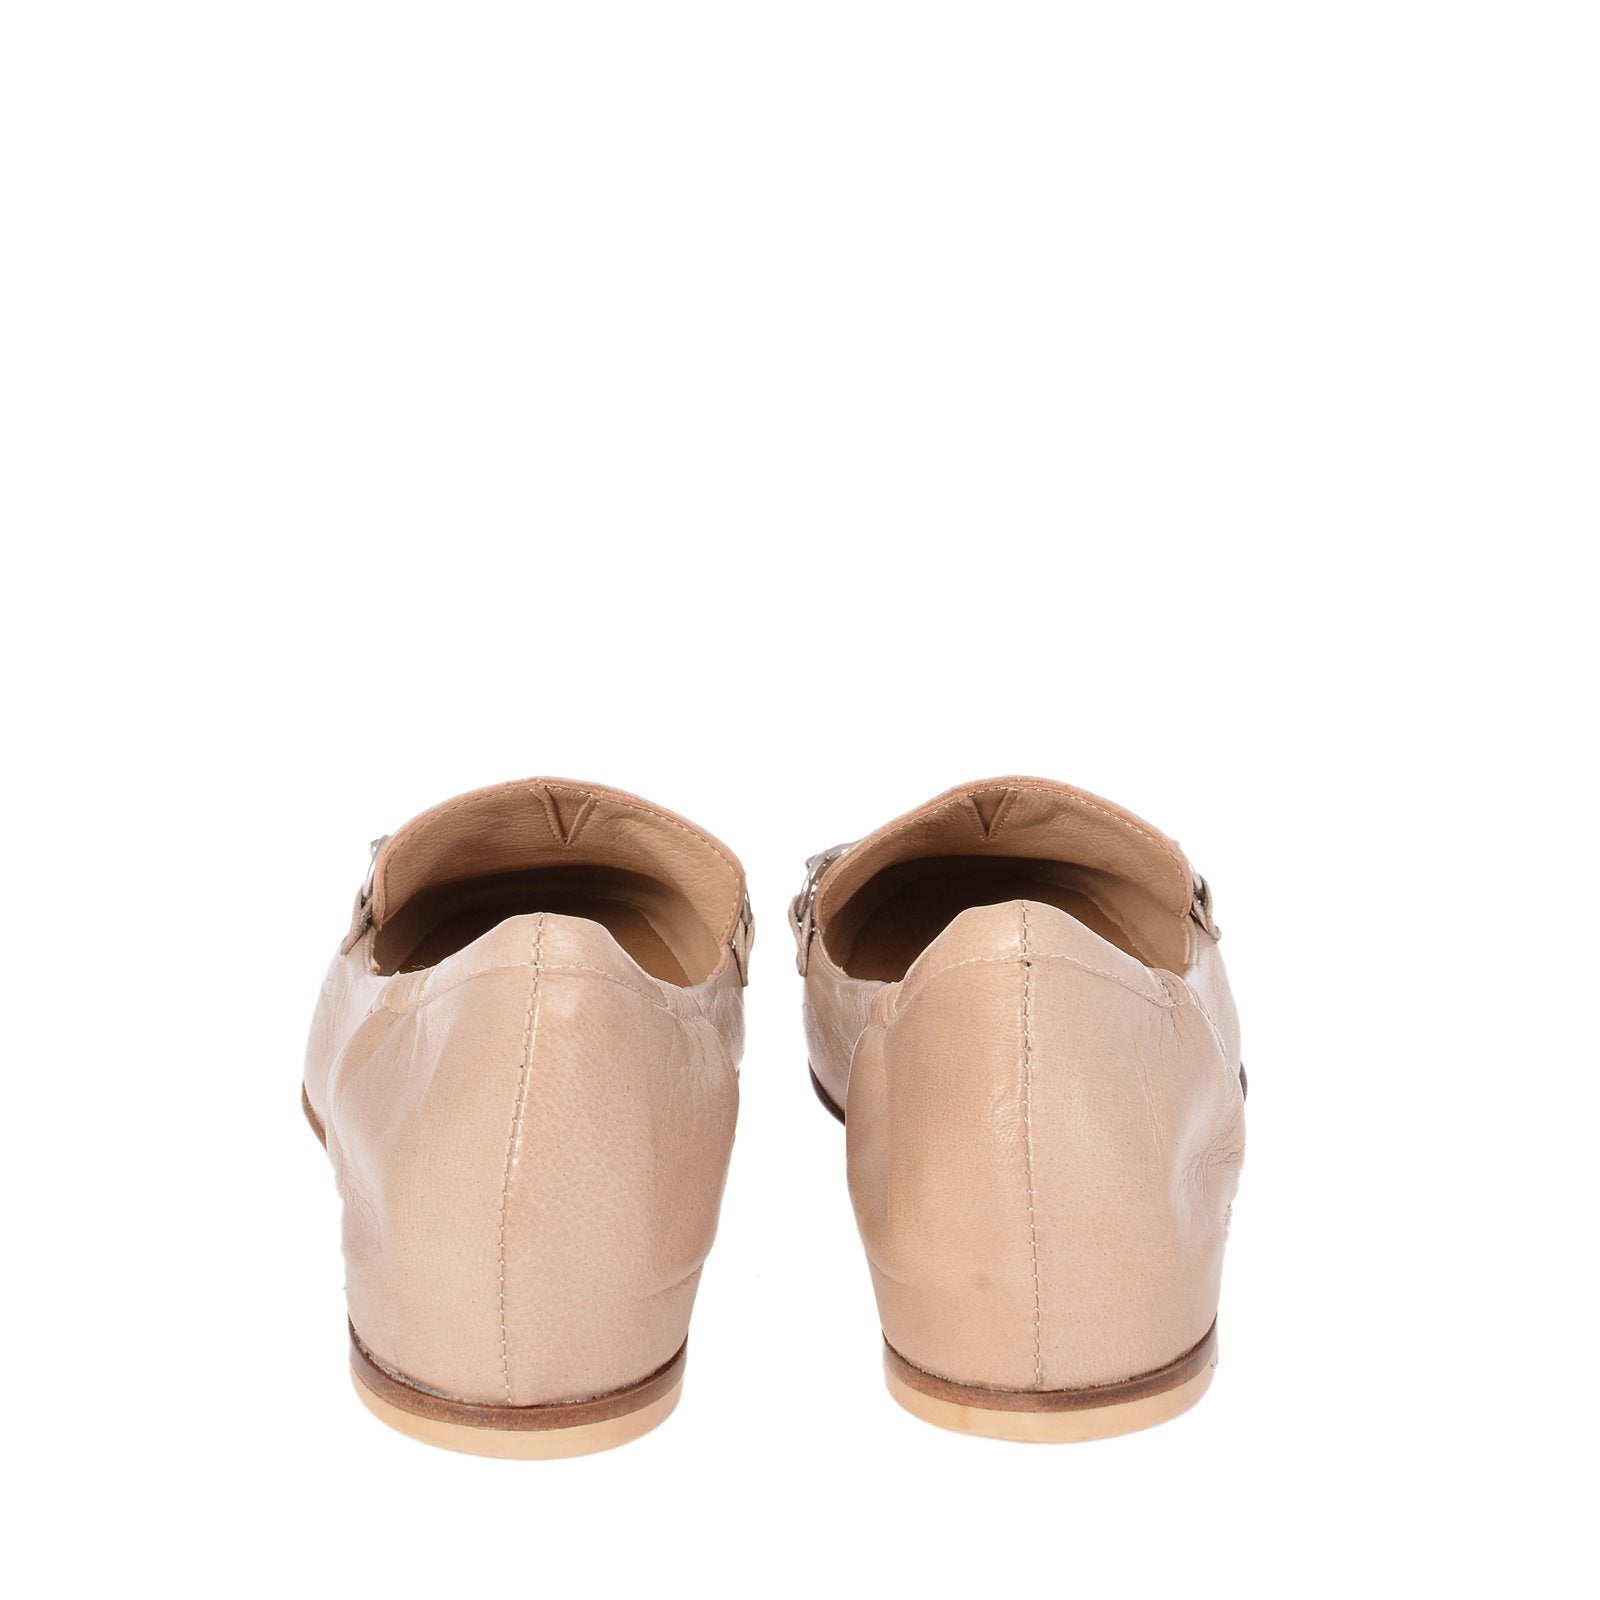 Lena Nude Leather Loafers Flats 1144NUDE - 6